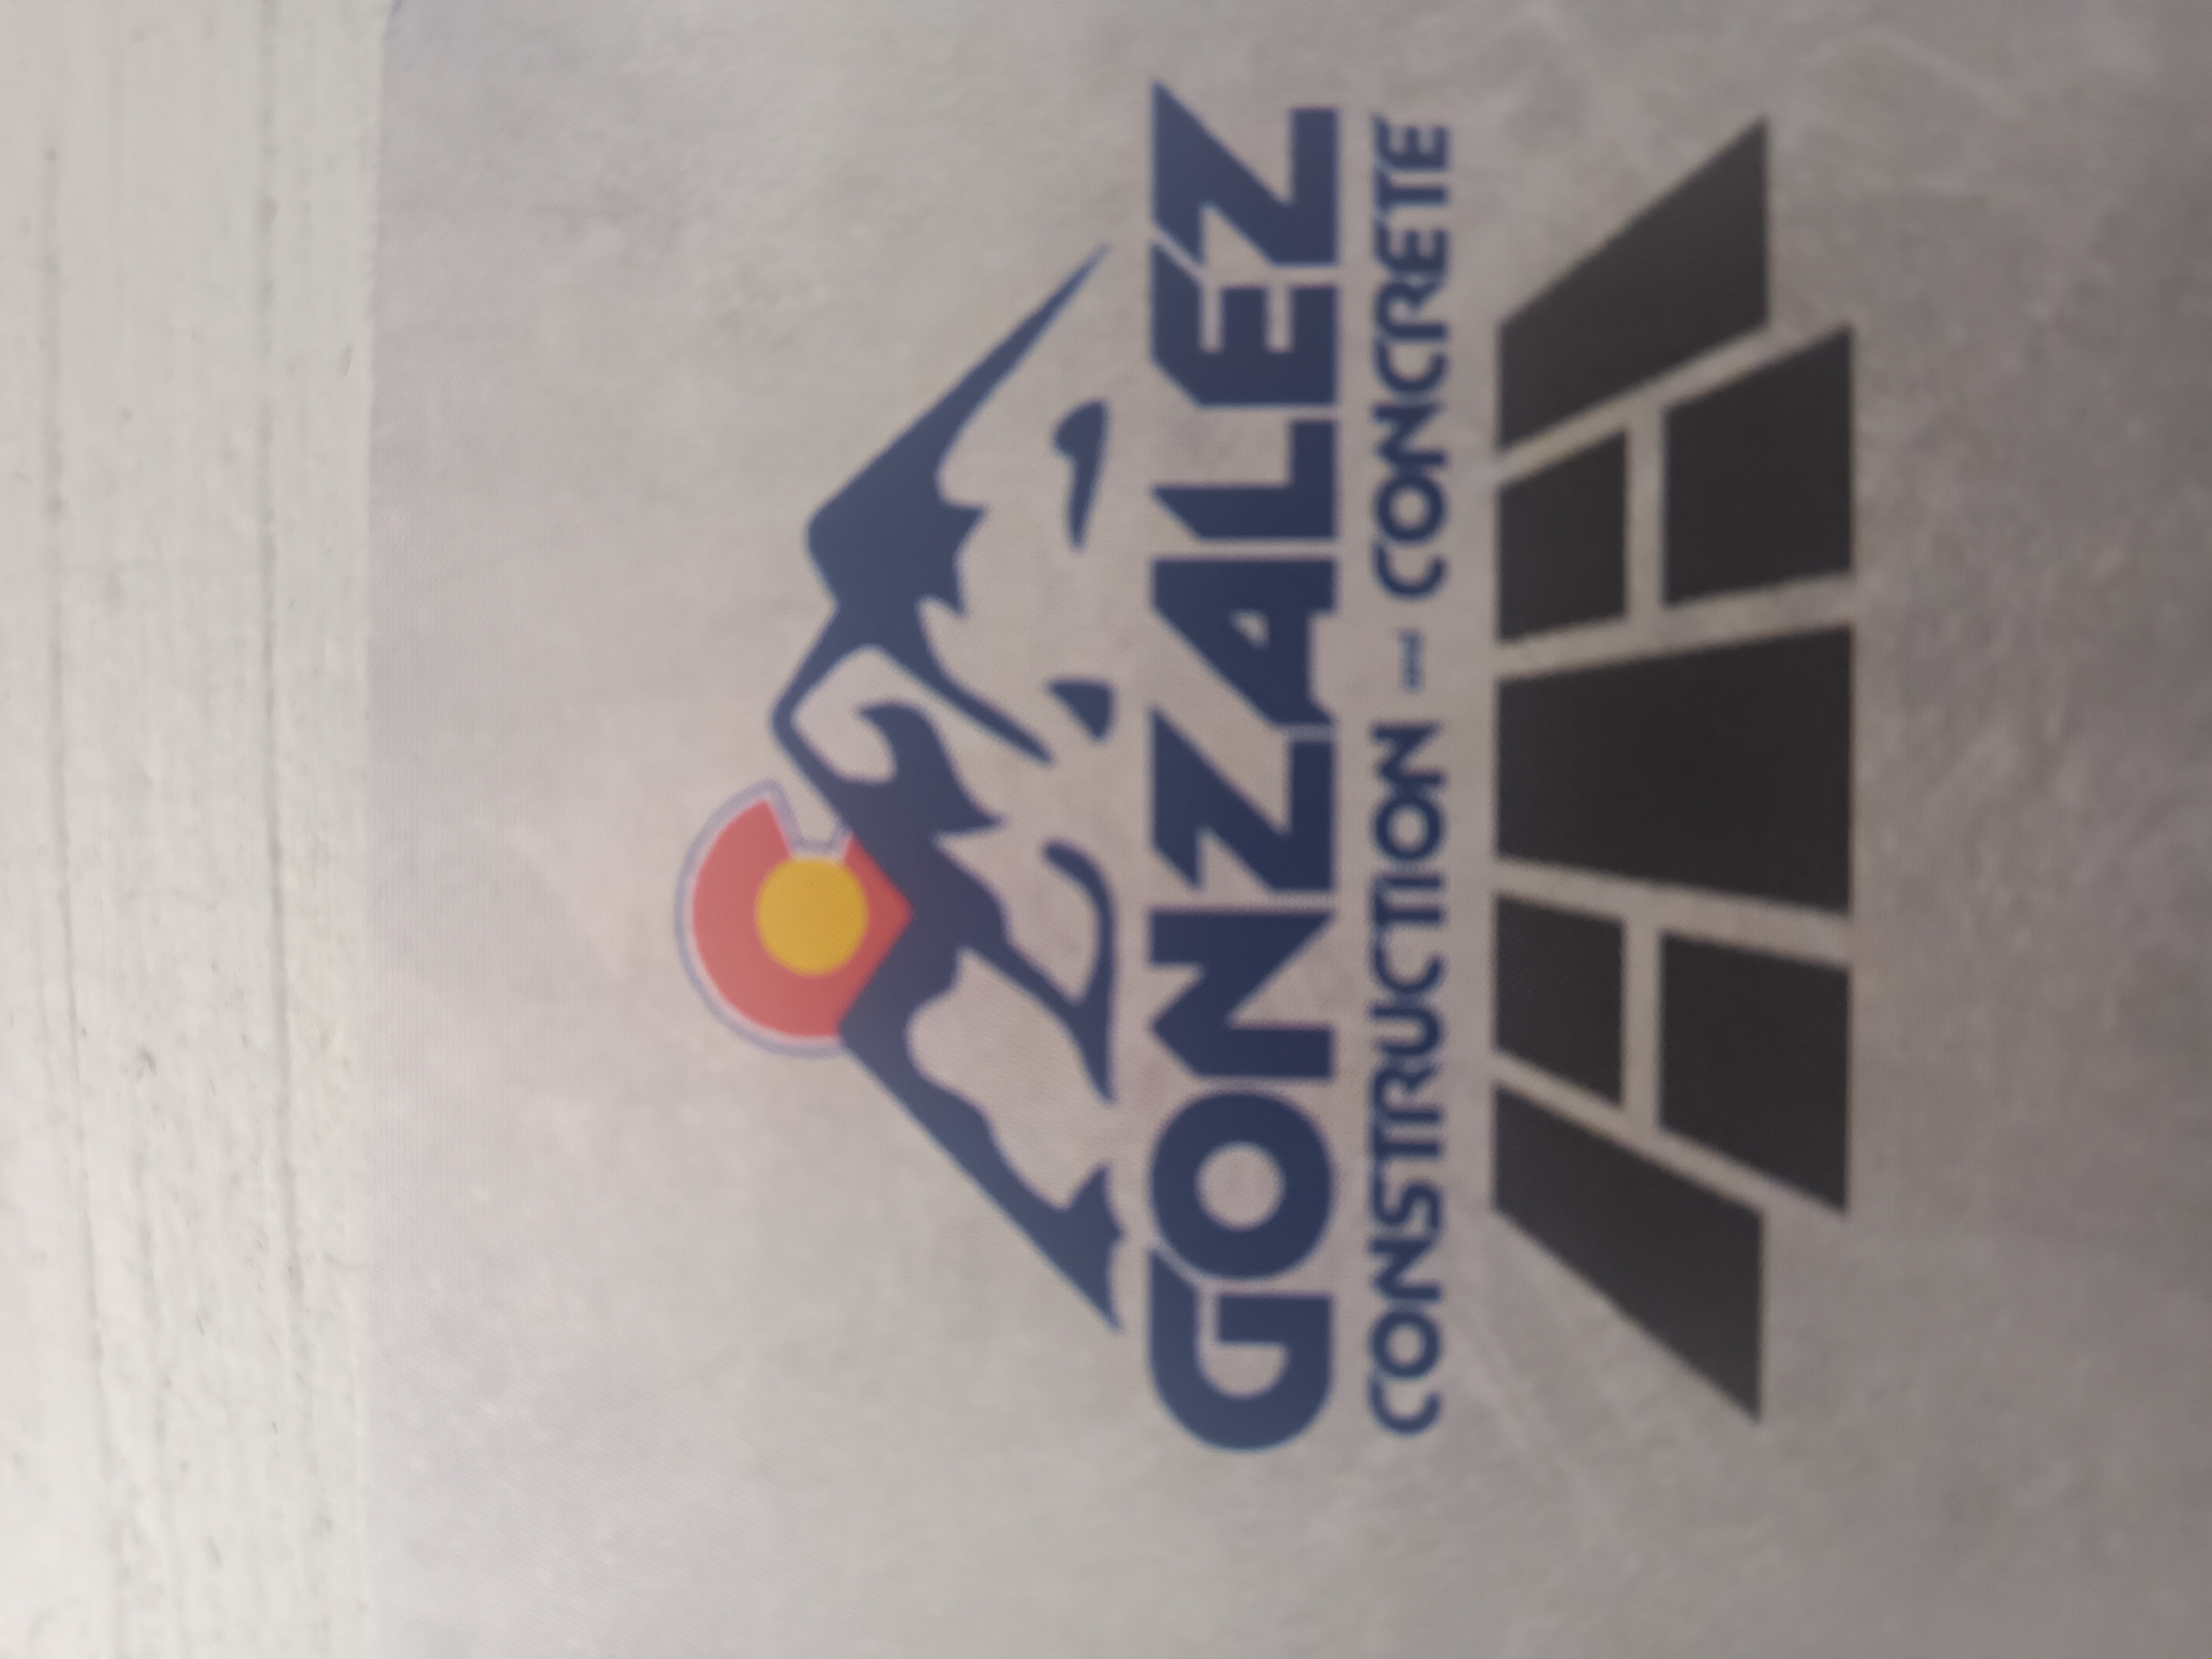 Gonzalez Construction Logo